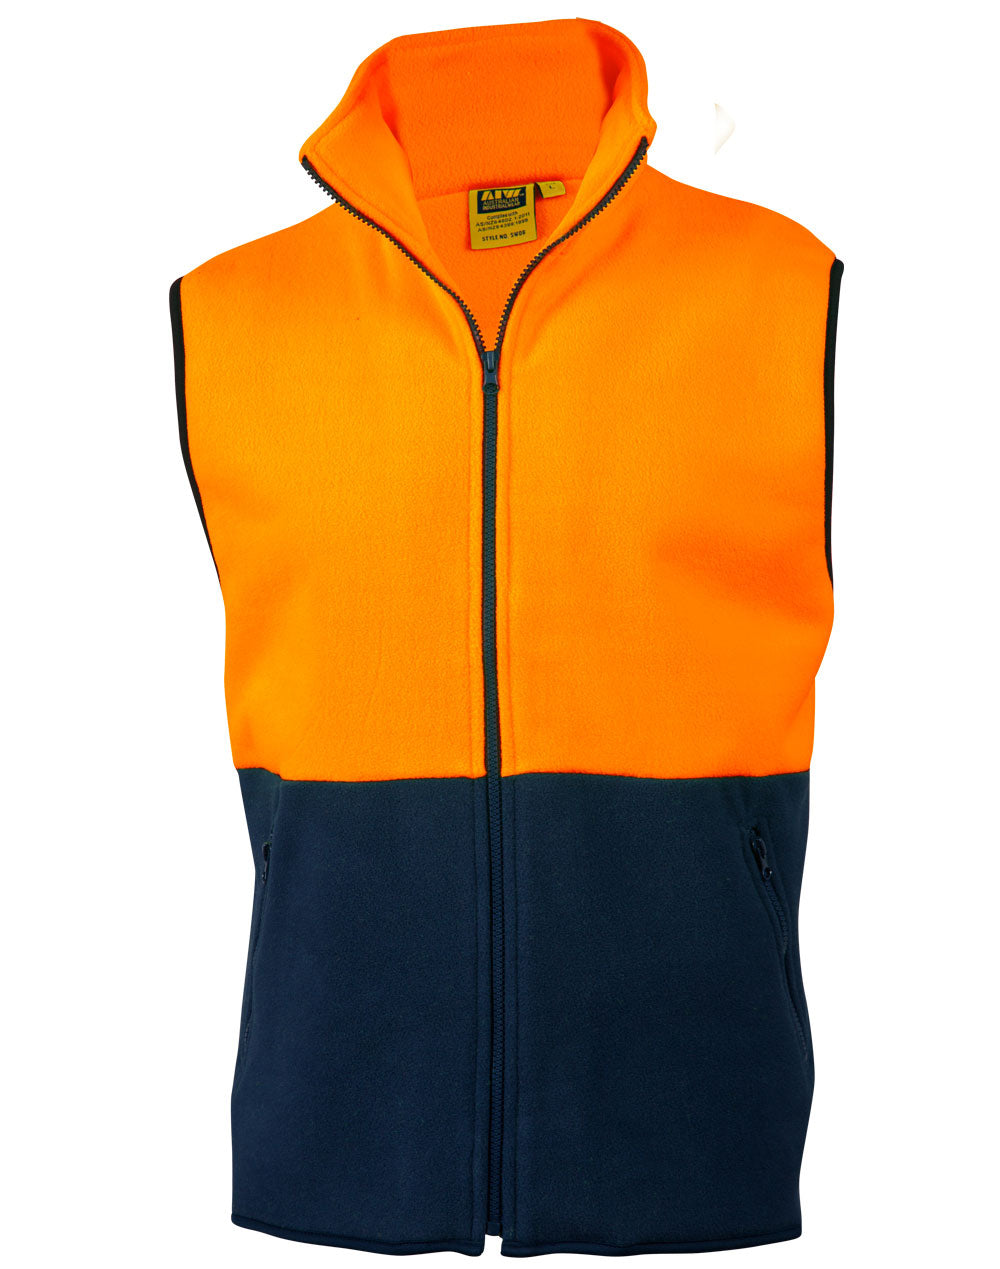 Hivis Polar Fleece Vest - made by AIW